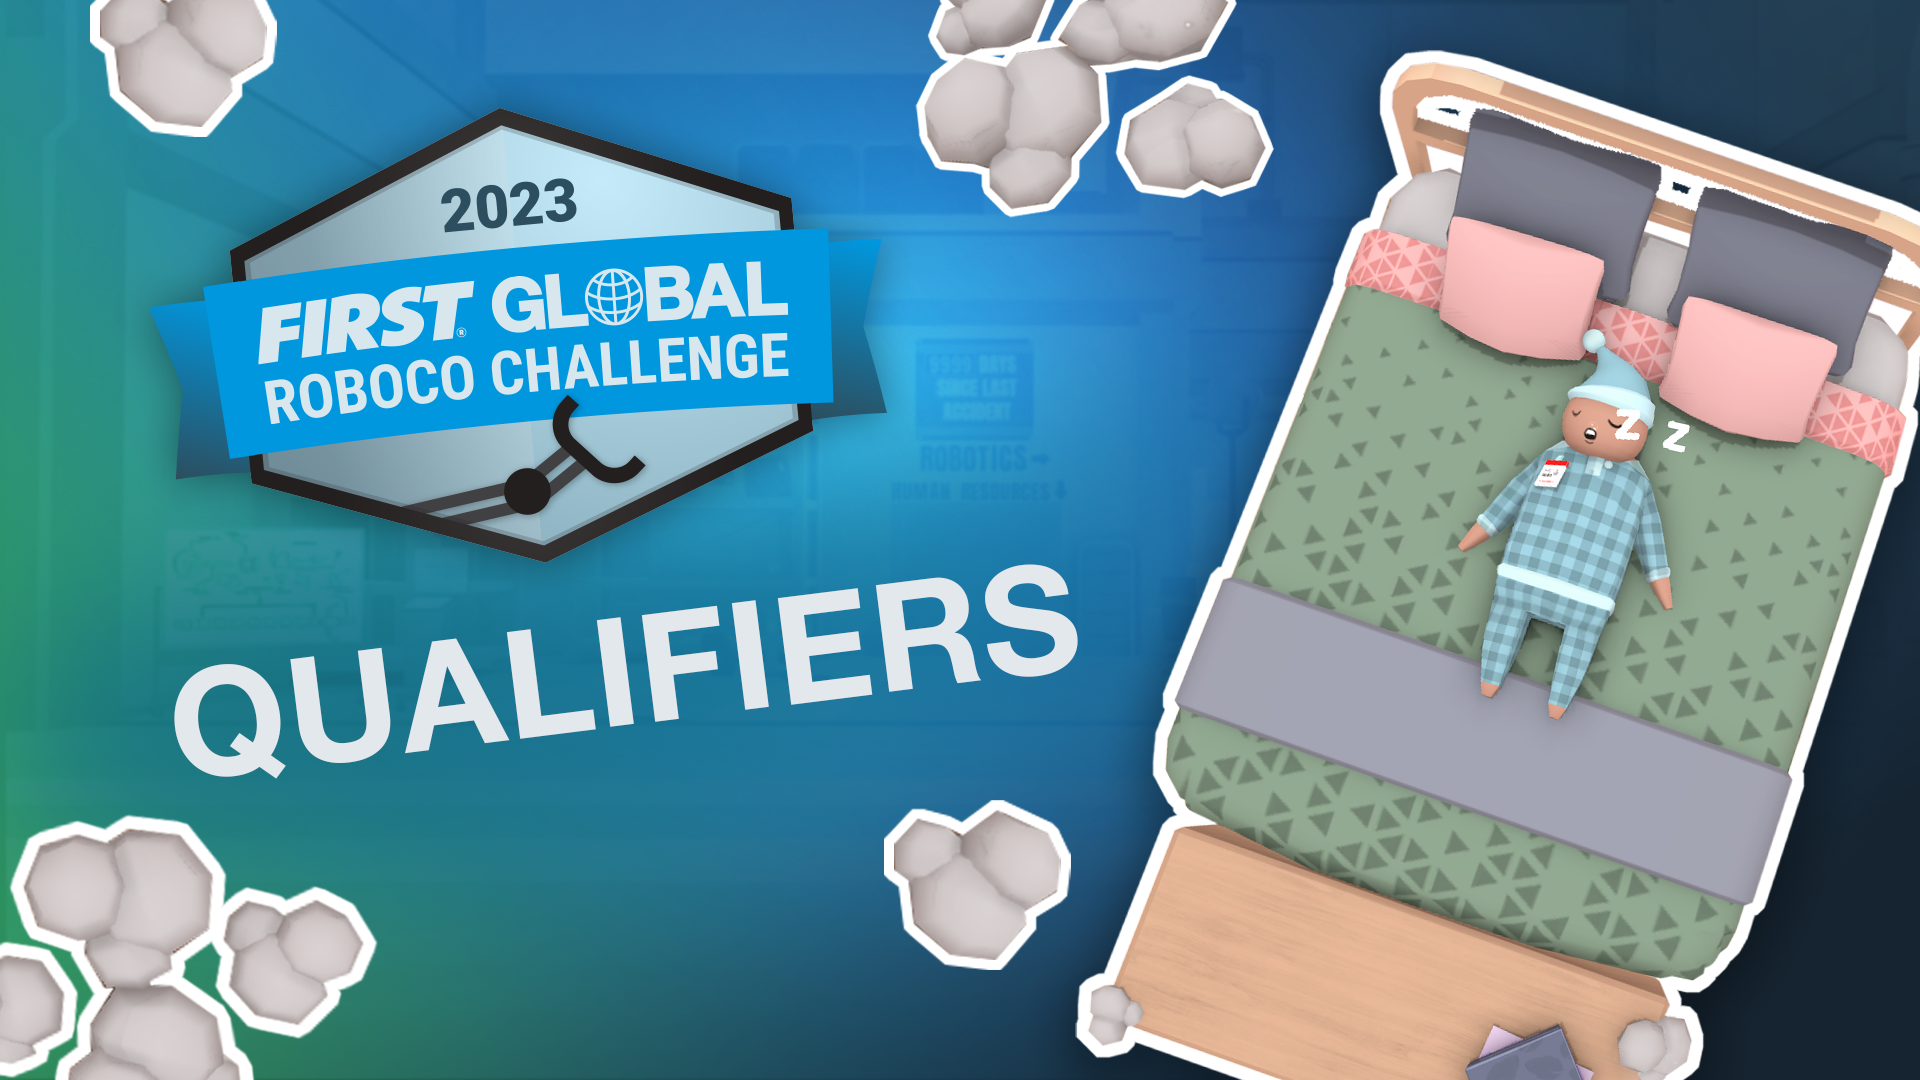 The 2023 FIRST Global RoboCo Challenge Qualifiers Recap!